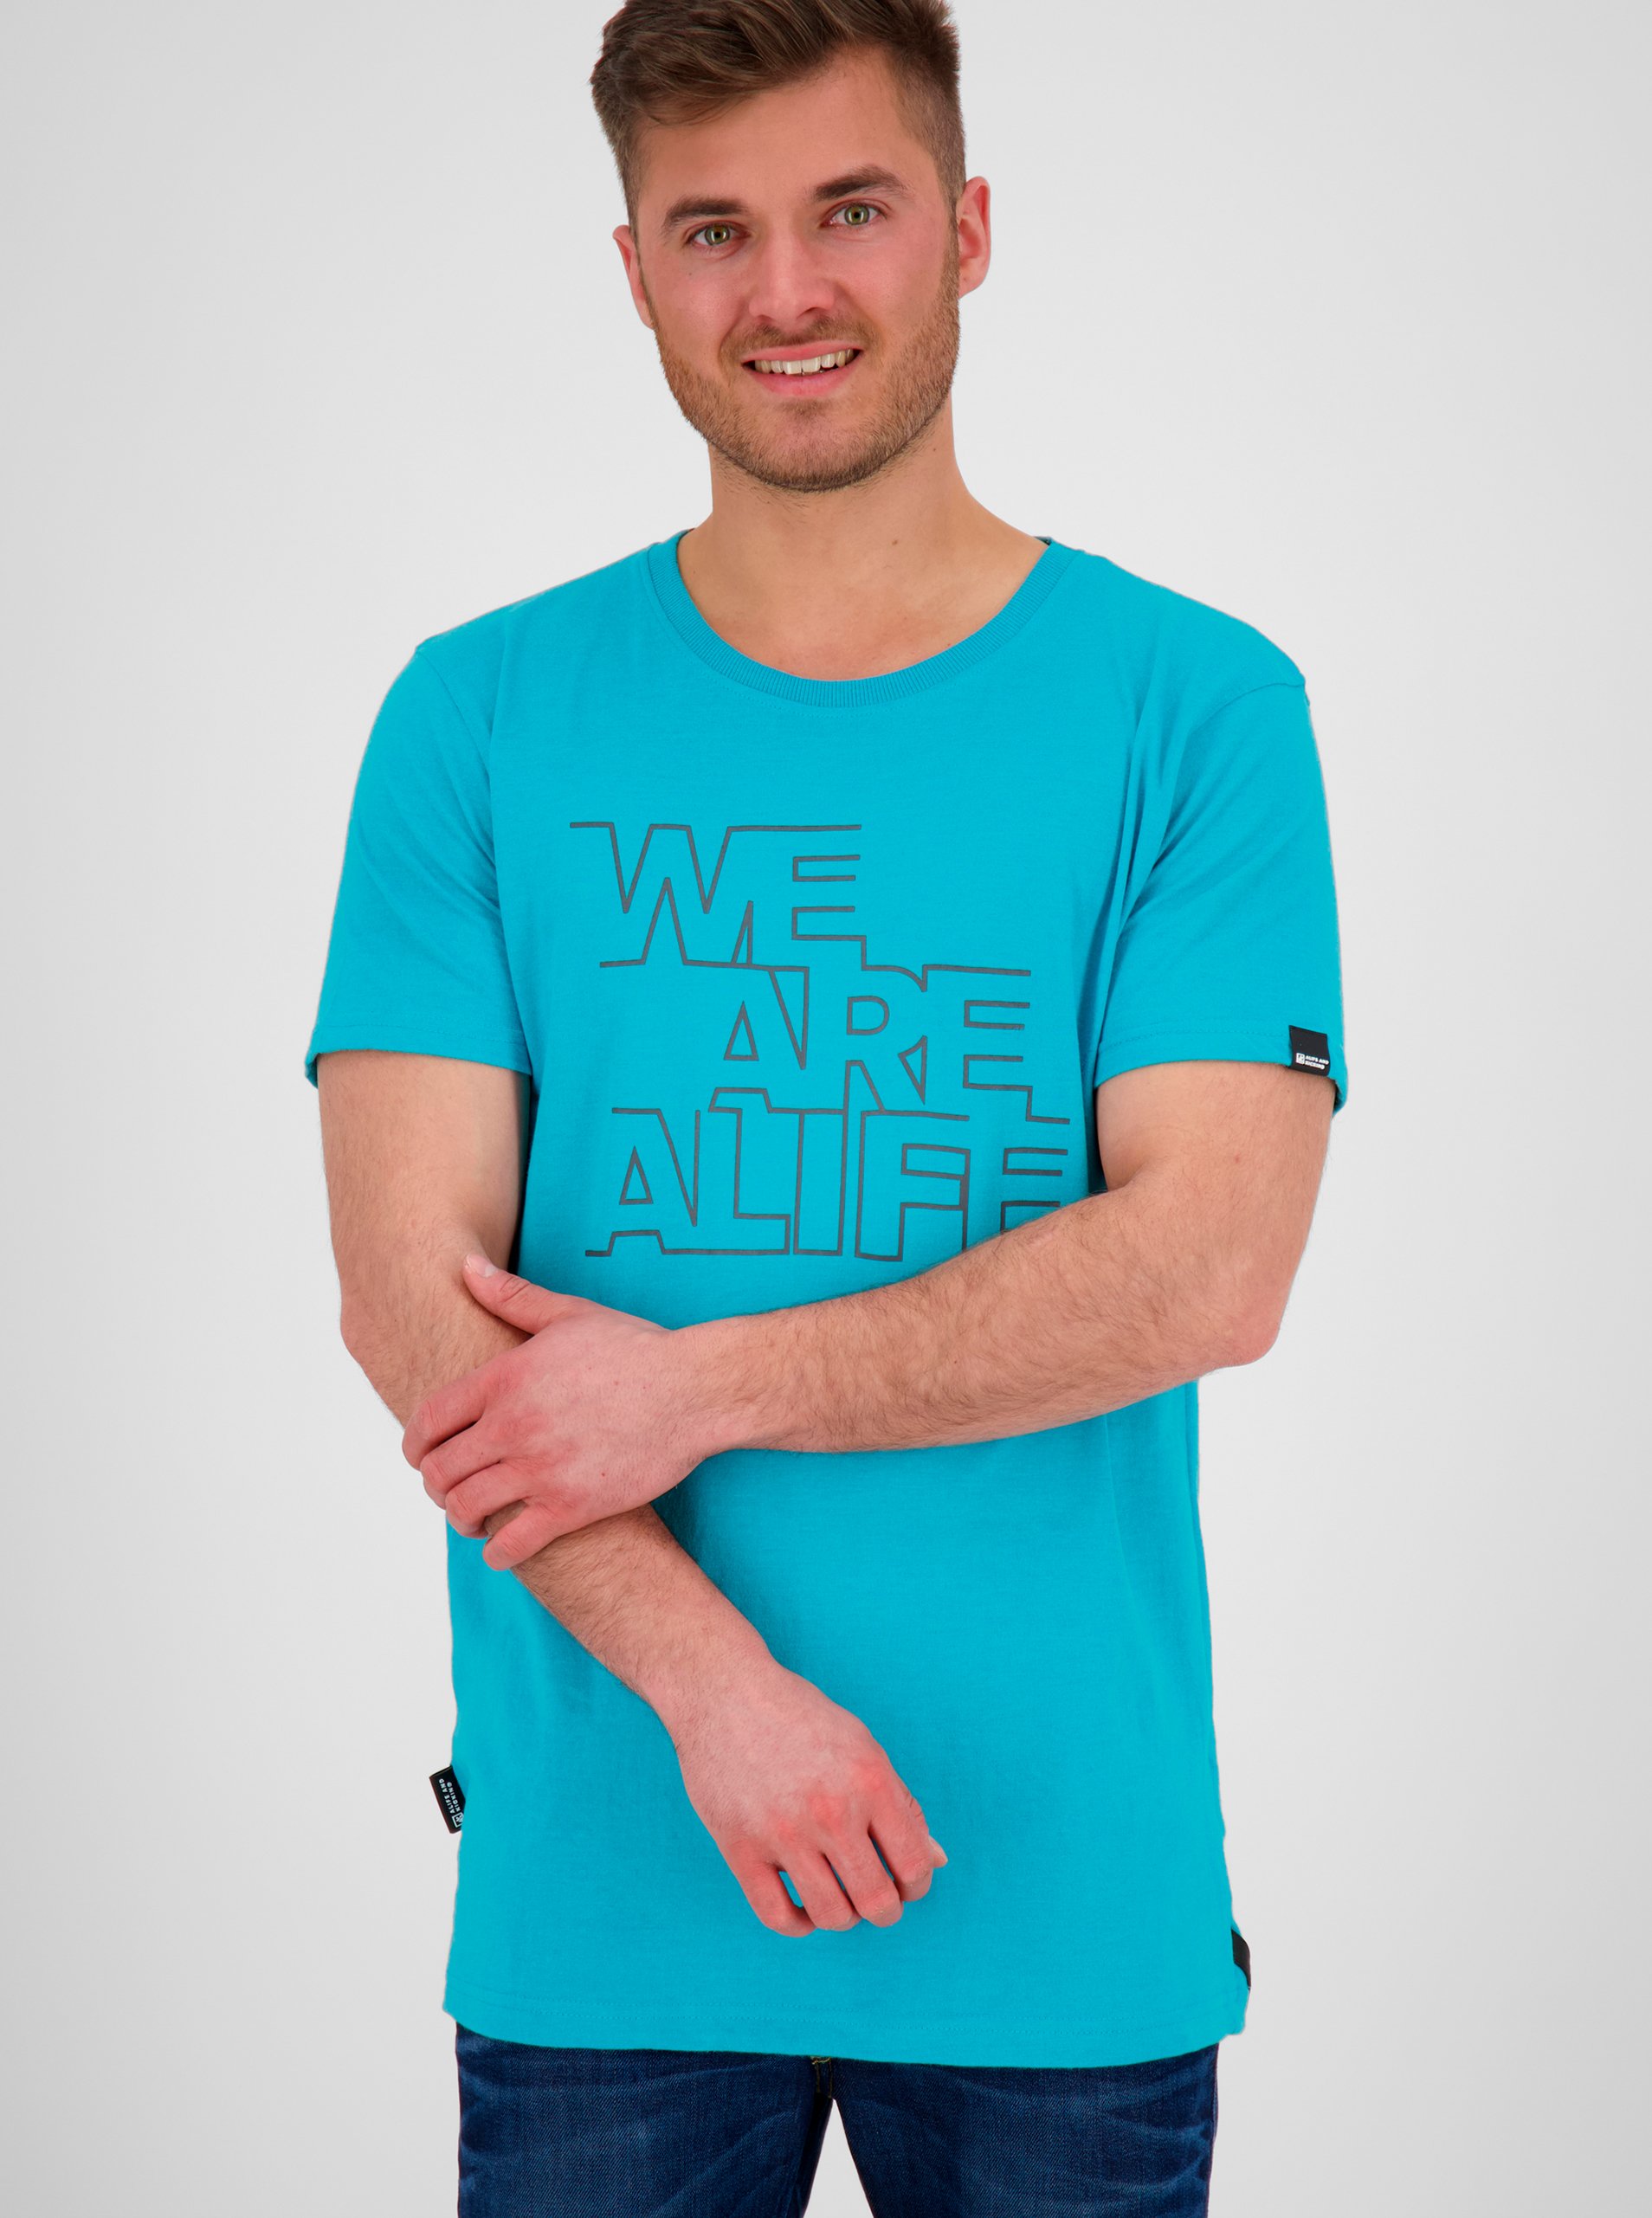 Blue Men's T-shirt with Alife and Kickin print - Men